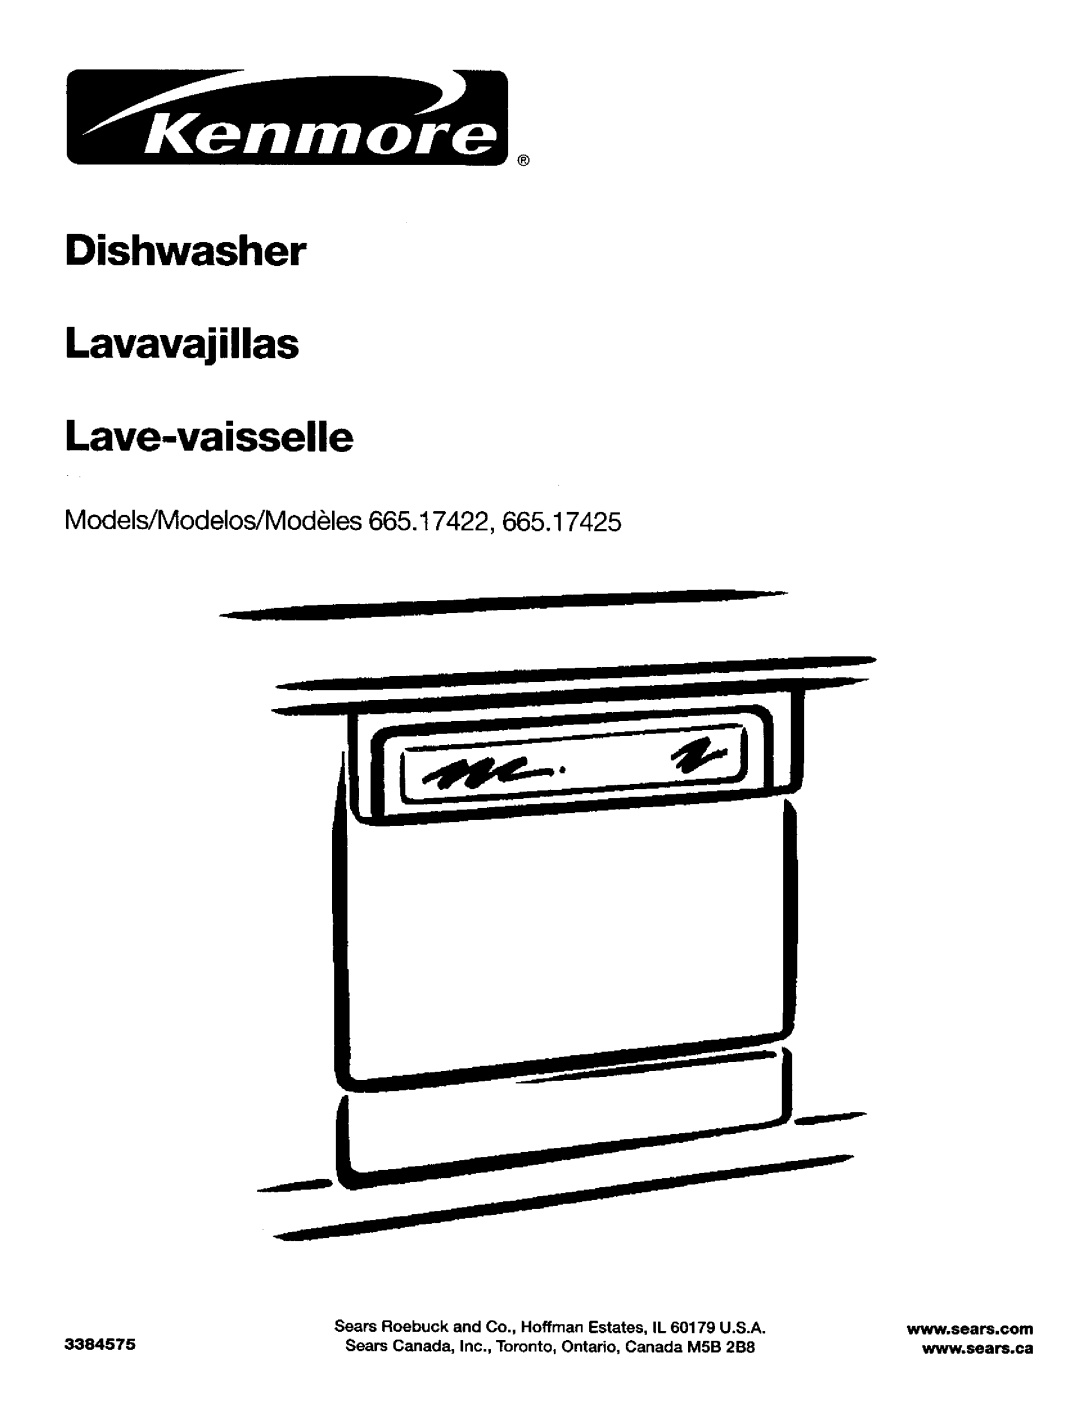 Kenmore 665.17425 manual Dishwasher Lavavajillas Lave-vaisselle, Models/Modelos/Mod les, Sears Roebuck, U.S.A, 3384575 